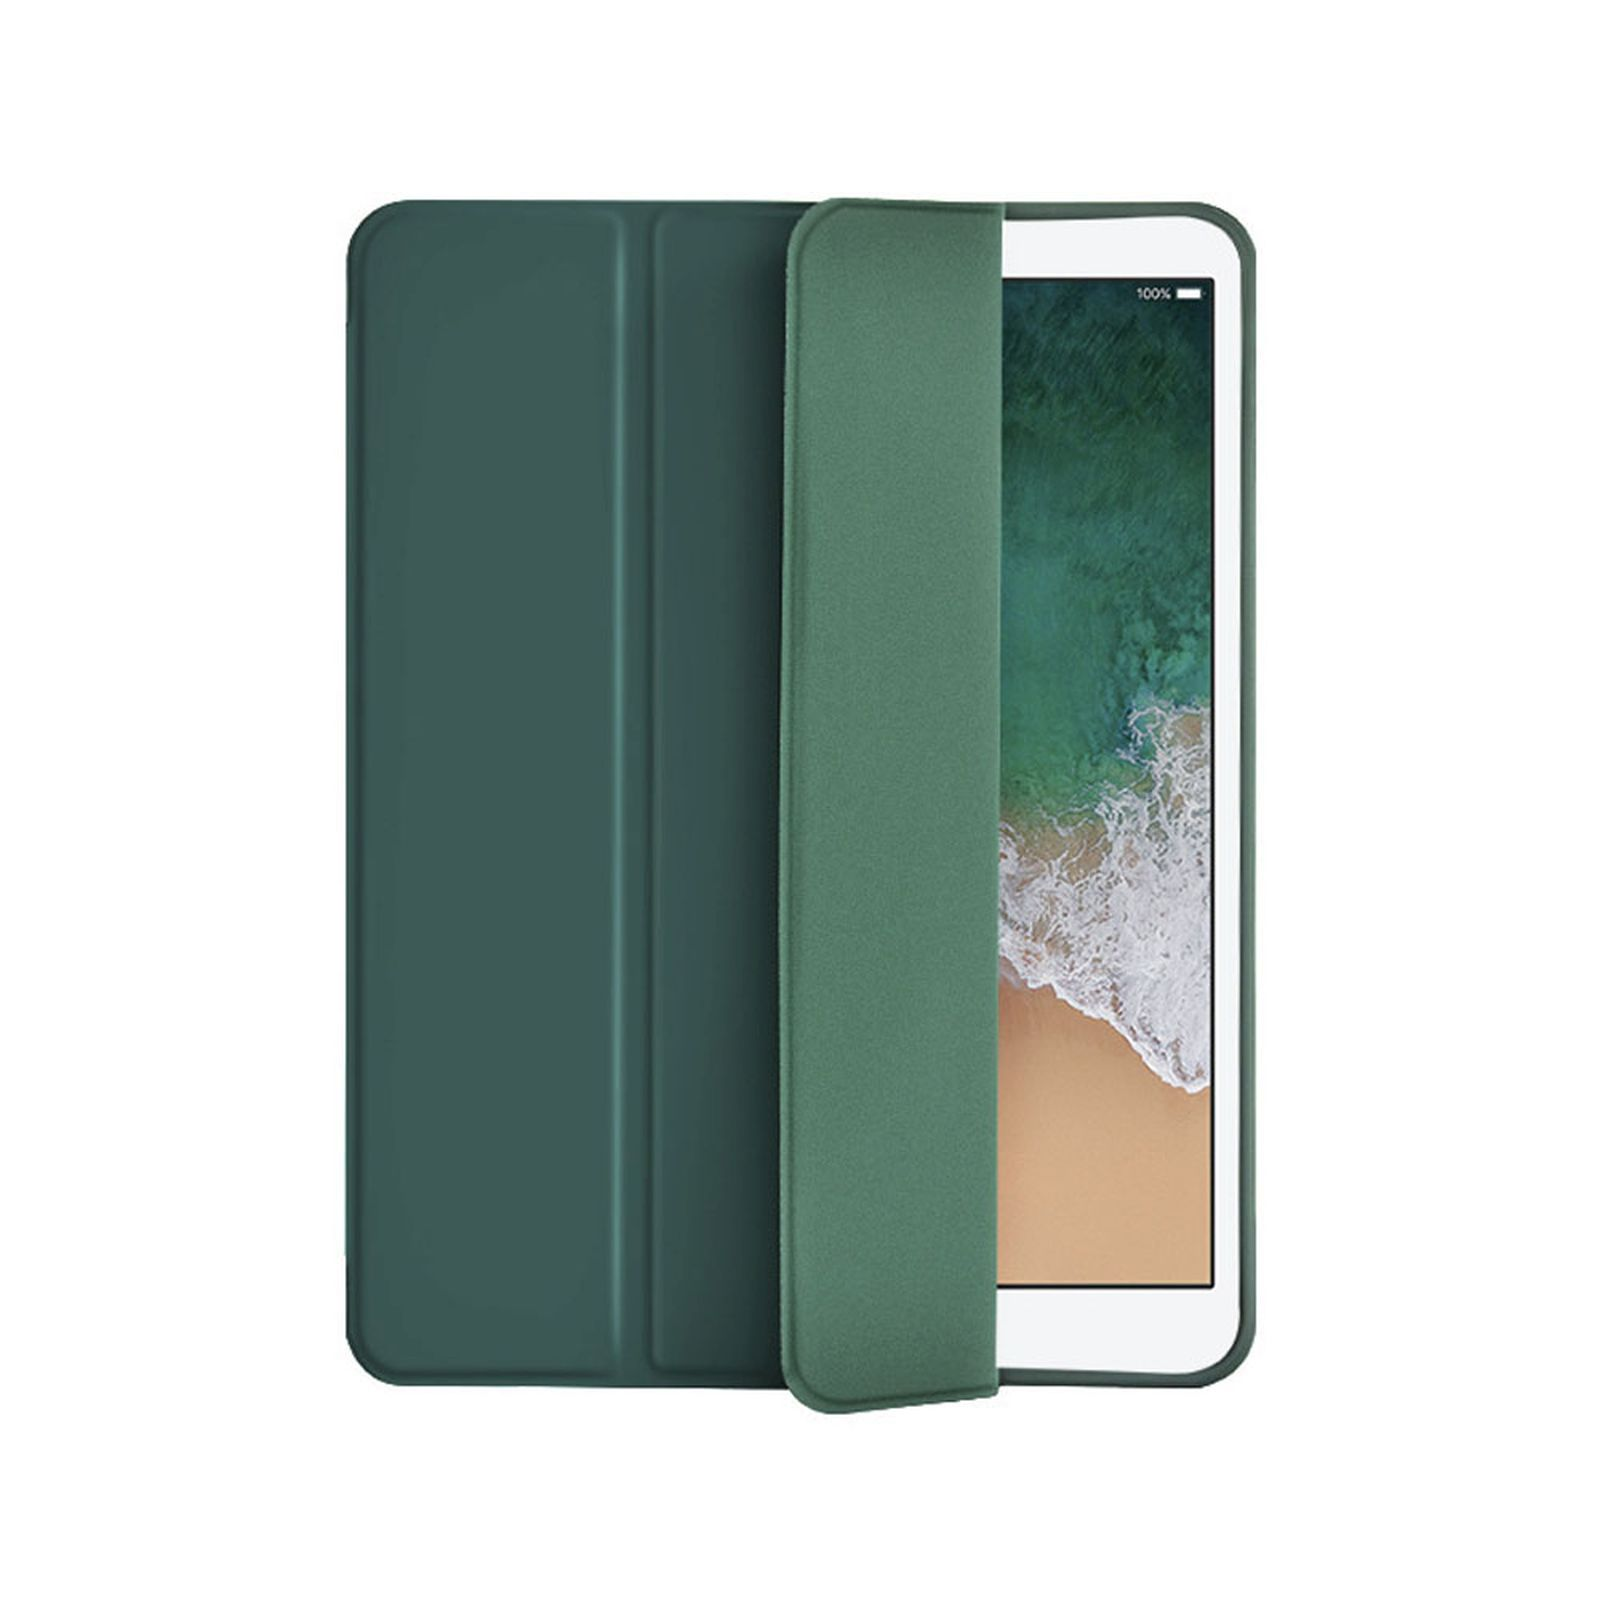 2 LOBWERK 1 iPad für Apple Schutzhülle Bookcover Air Air Hülle Kunststoff, Grün Zoll 9.7 9.7